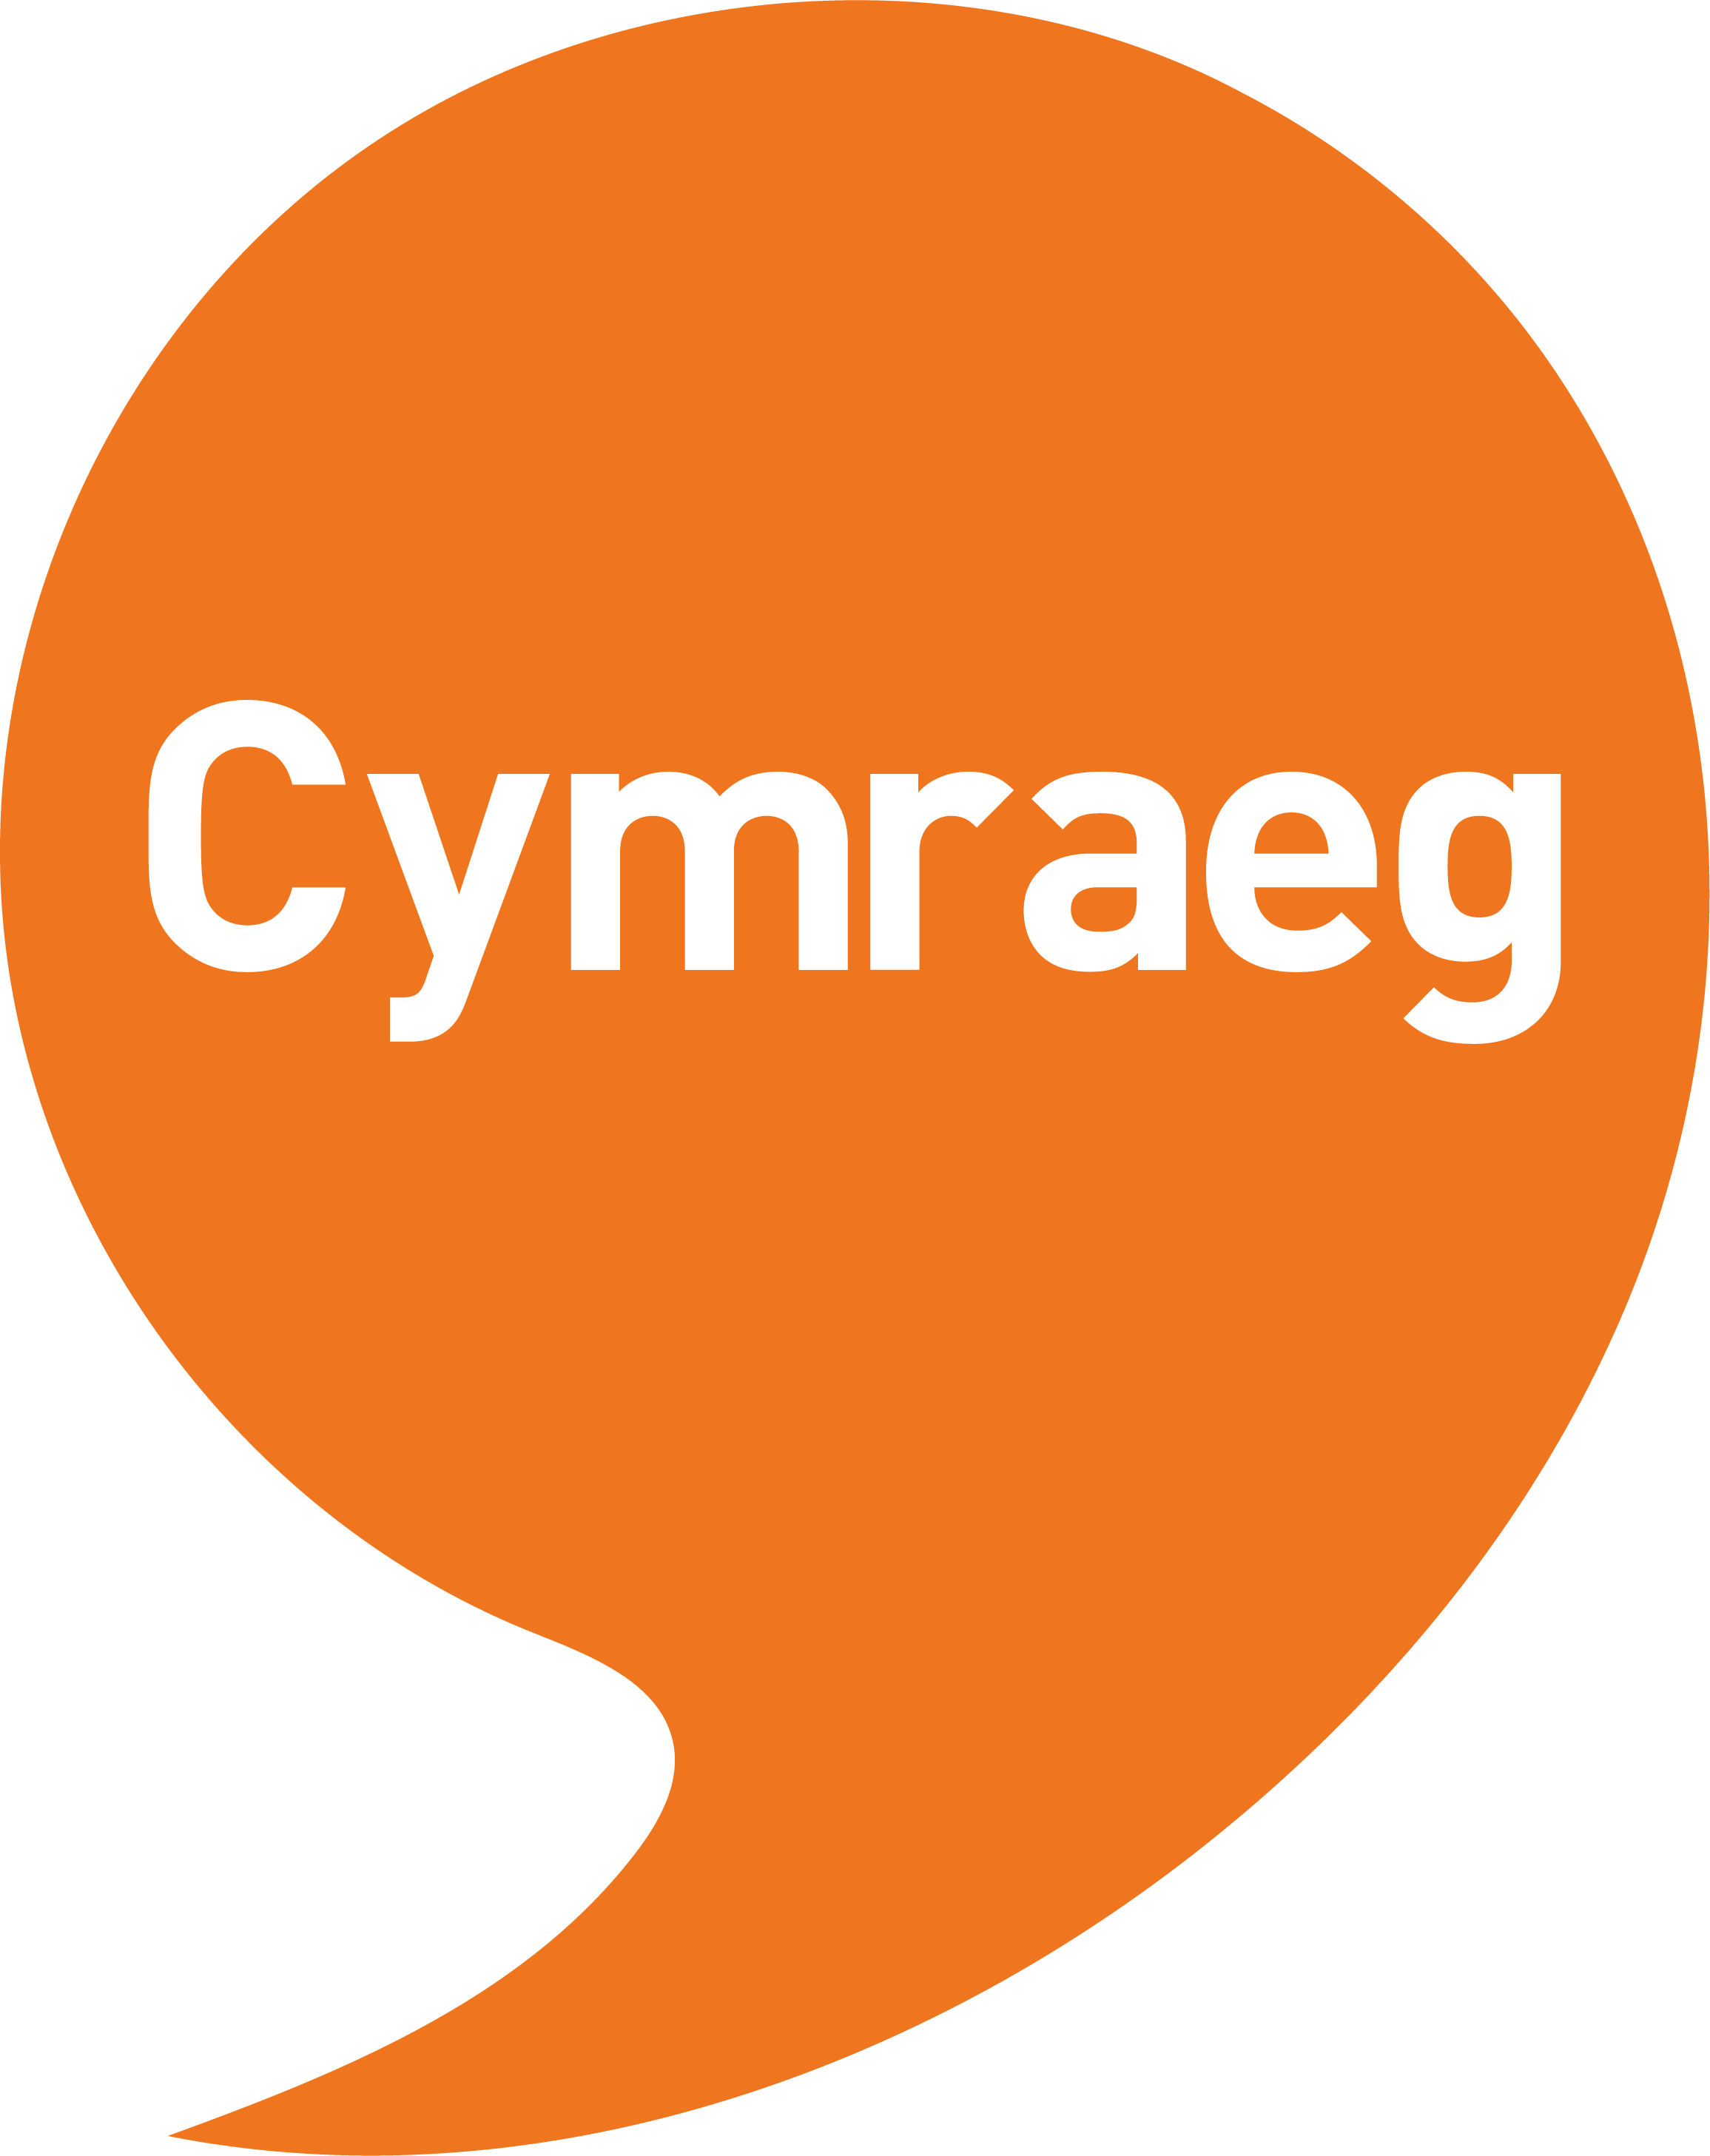 Speak Cymraeg logo